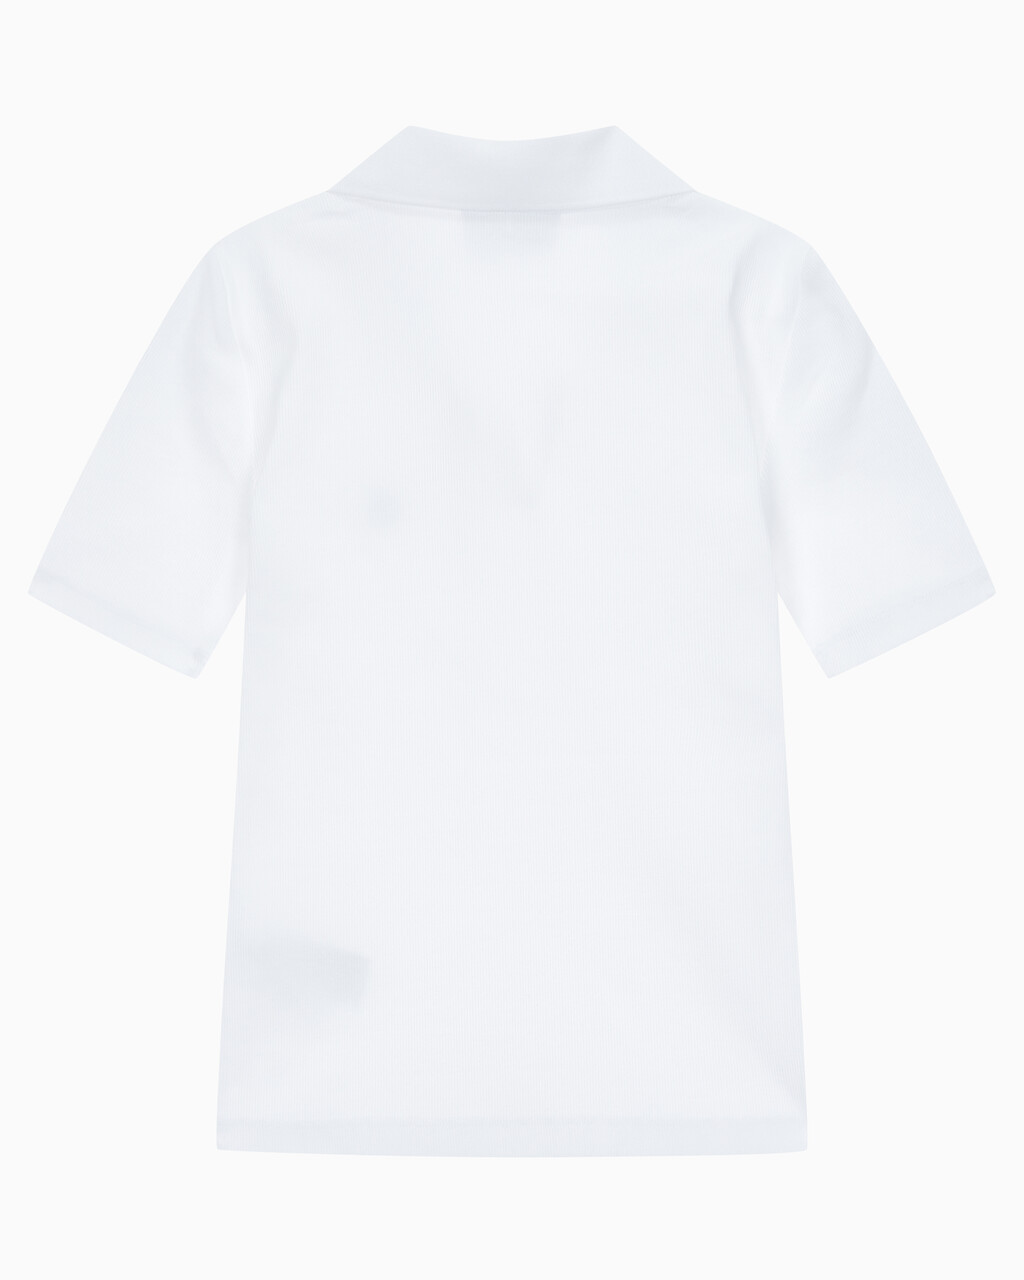 Buy 여성 슬림핏 립 브이넥 폴로 티셔츠 in color BRIGHT WHITE